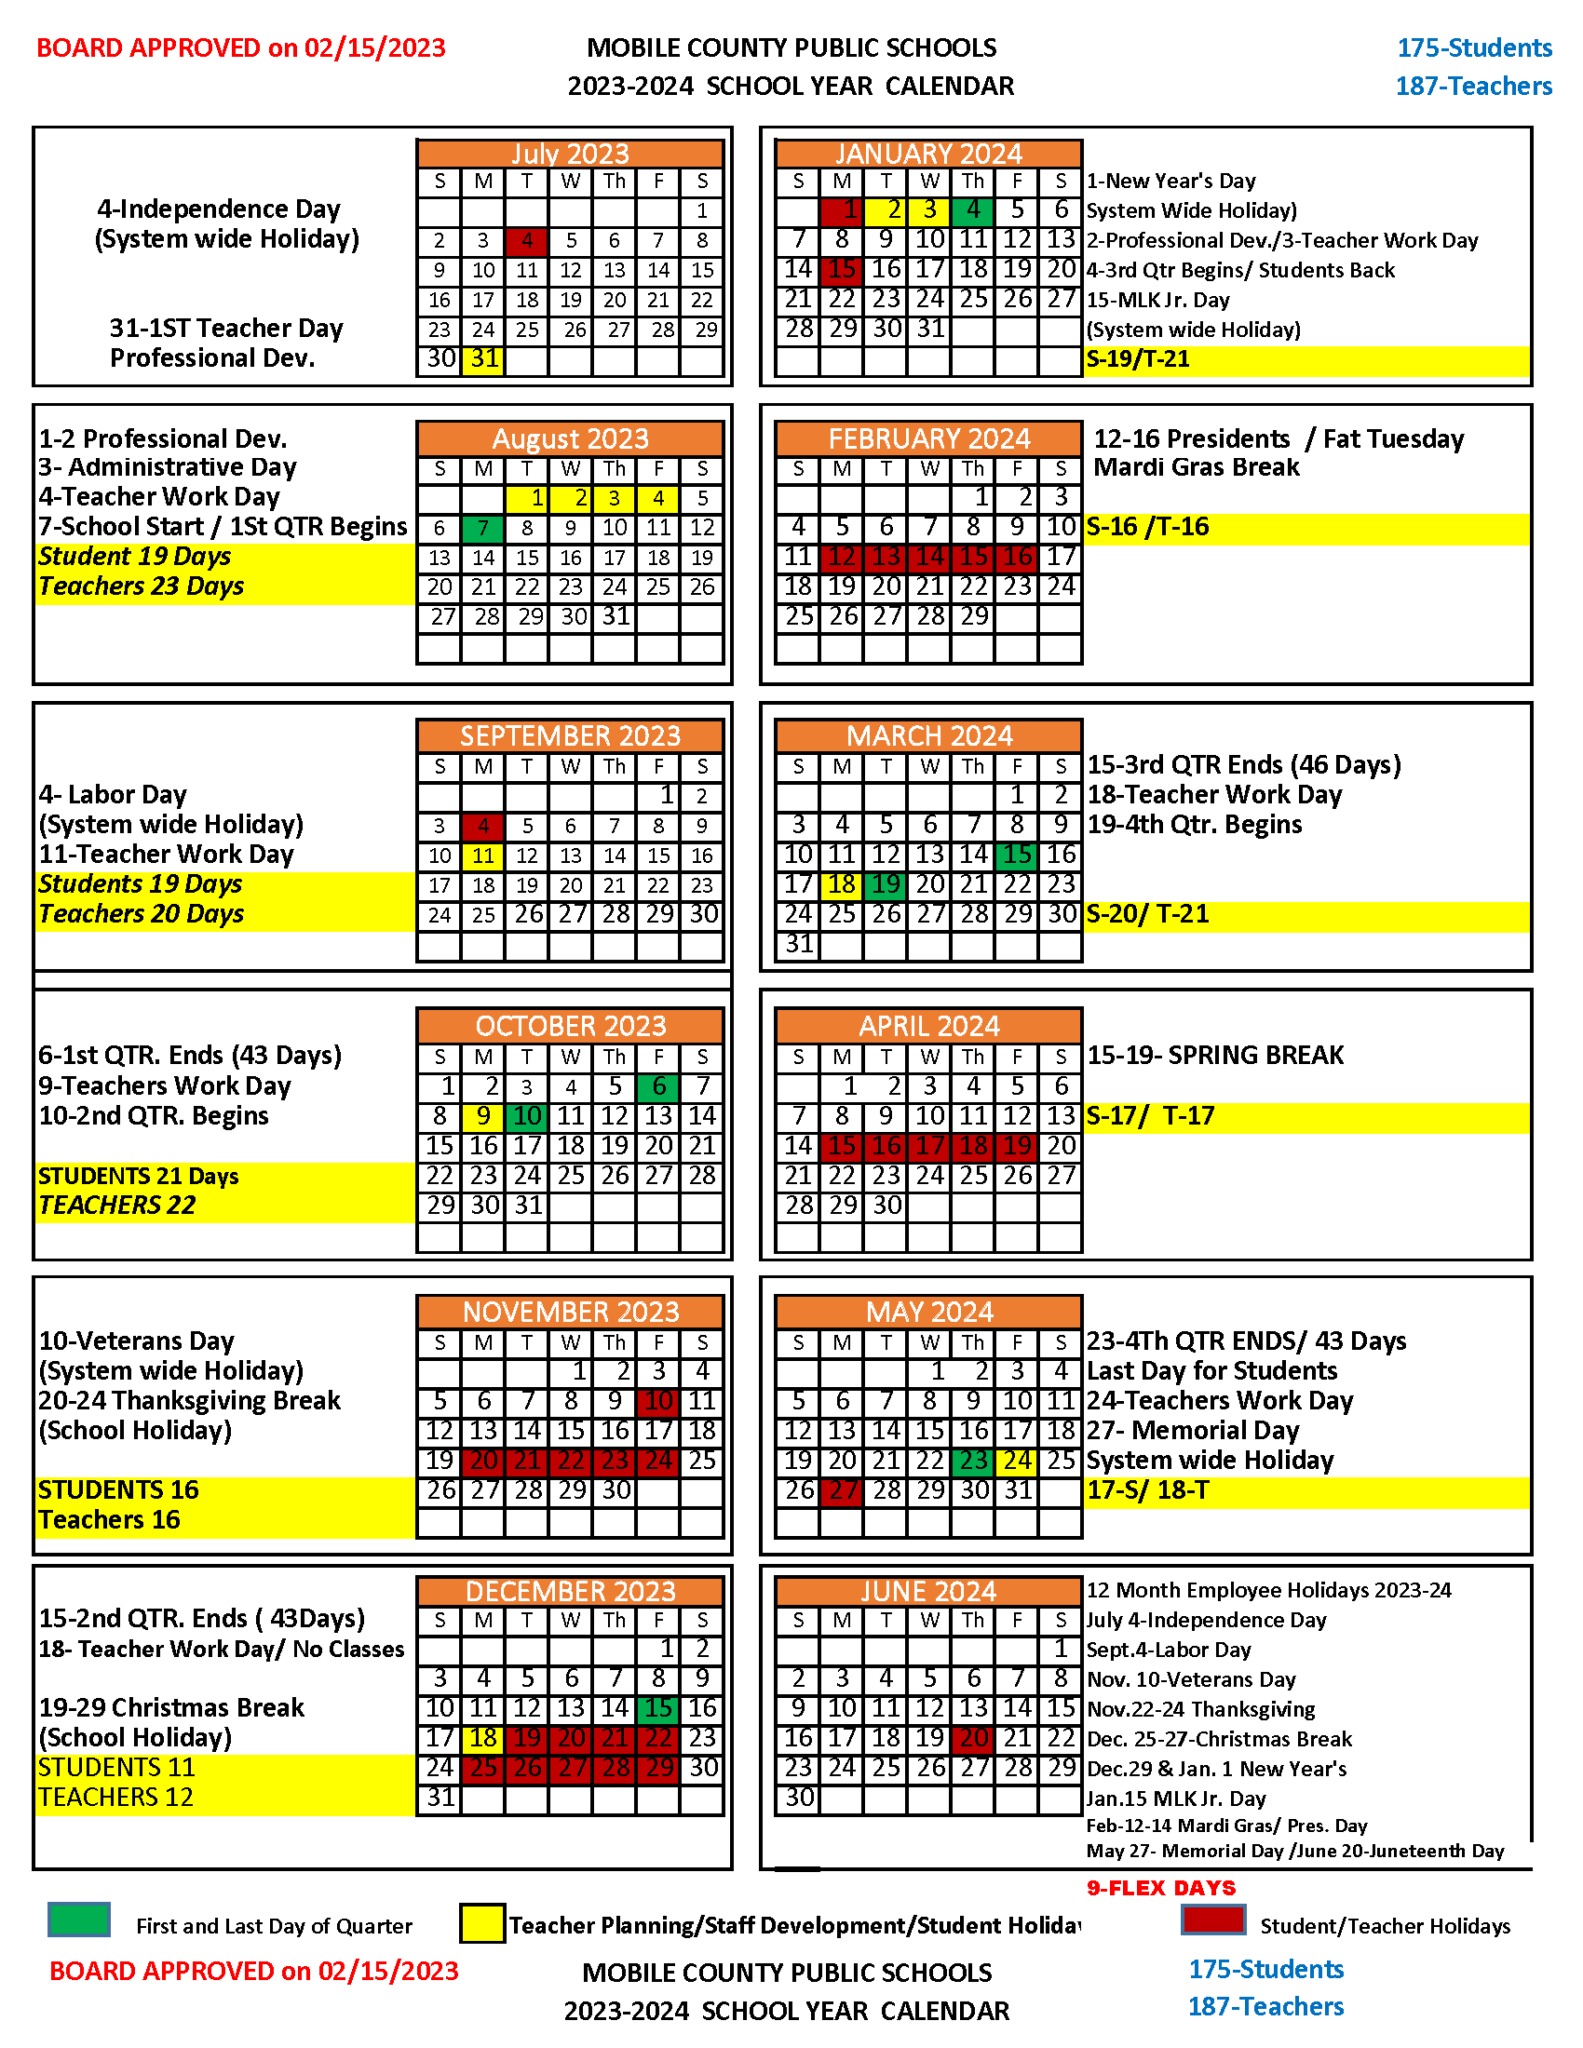 Mobile County Public Schools Calendar 20242025 in PDF